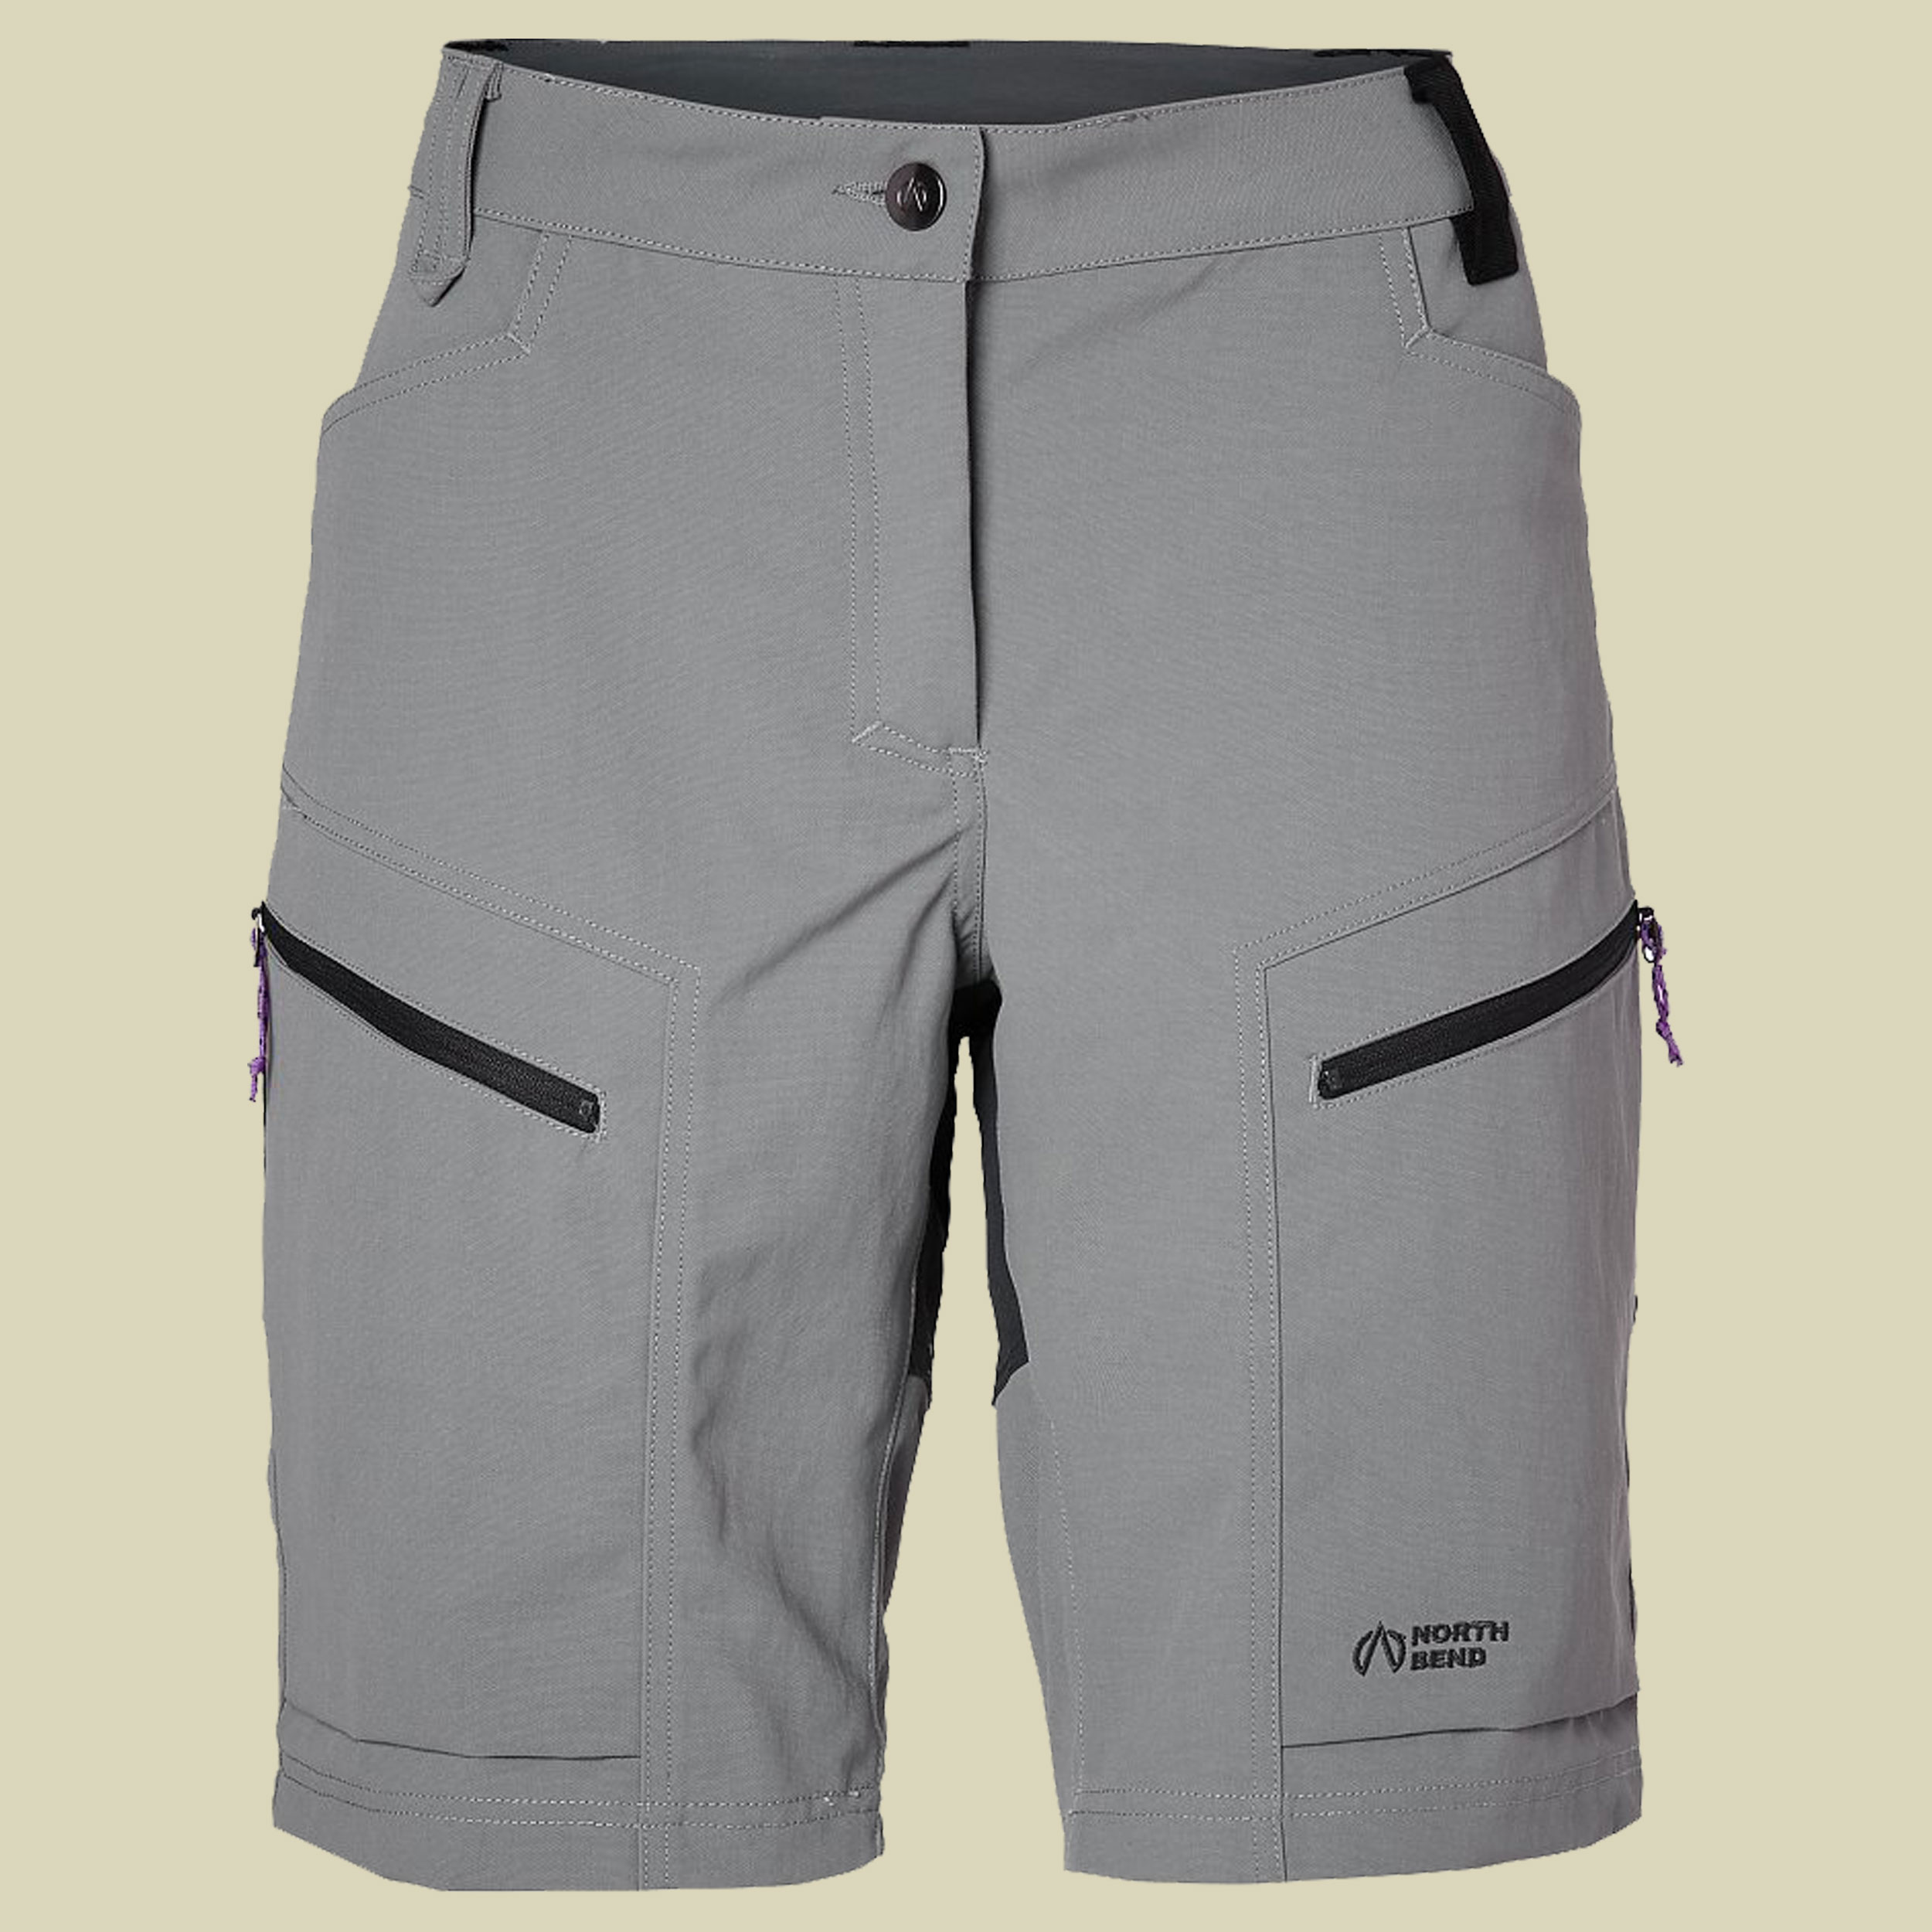 Trekk Shorts W Größe 40 Farbe urban grey 503